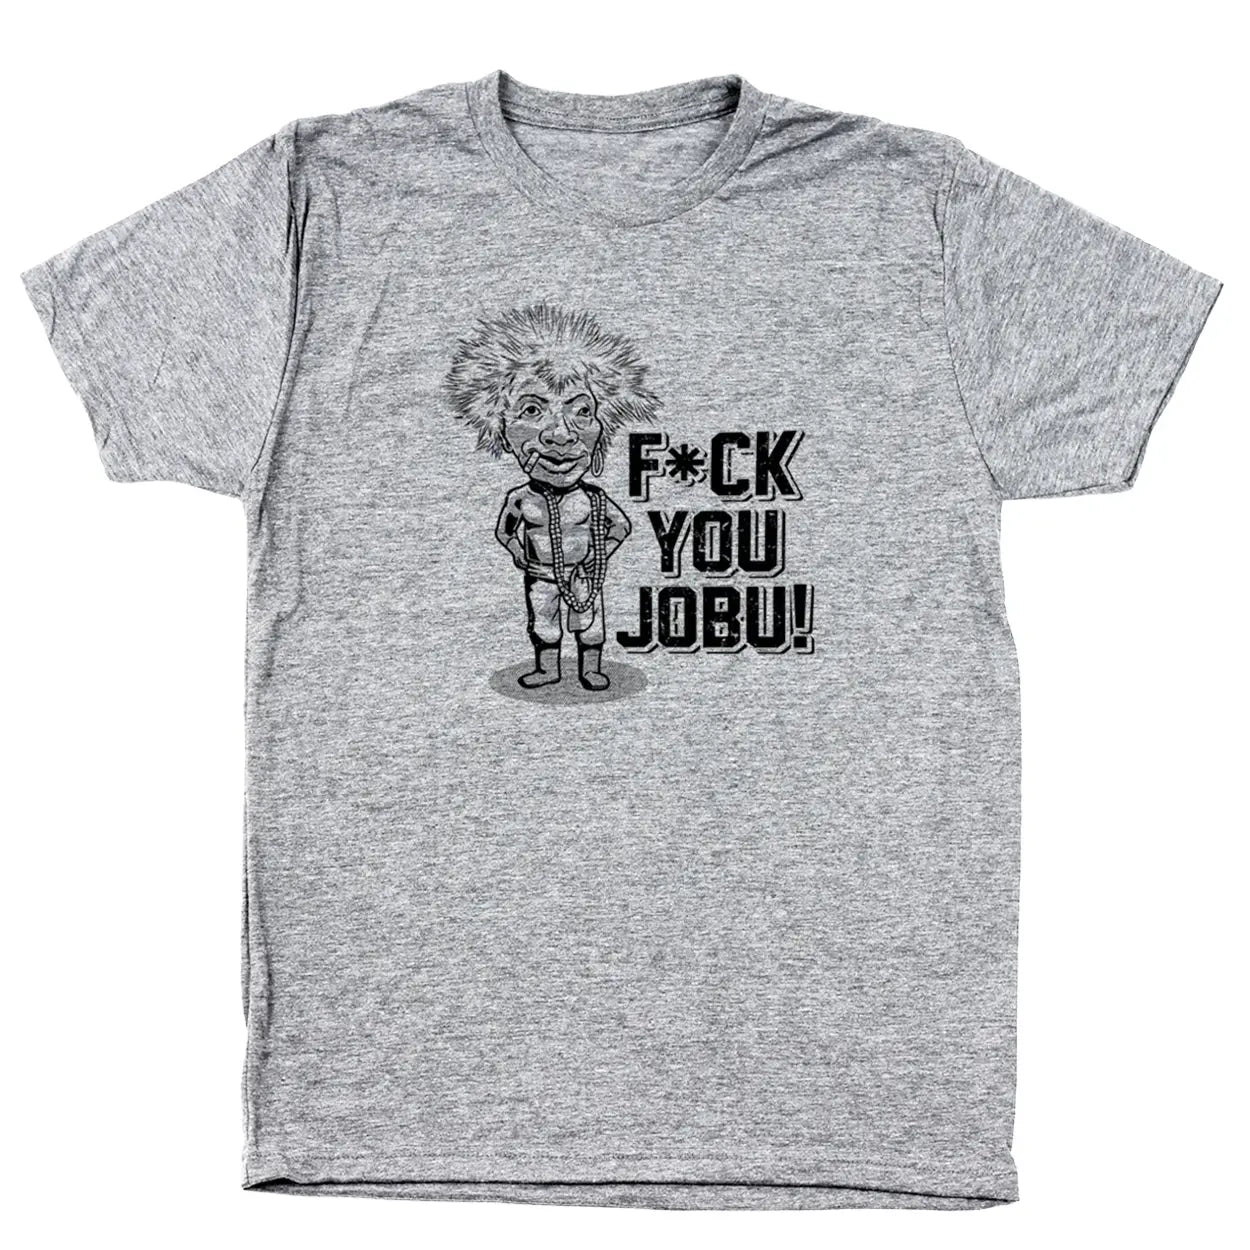 F You Jobu Tshirt - Donkey Tees